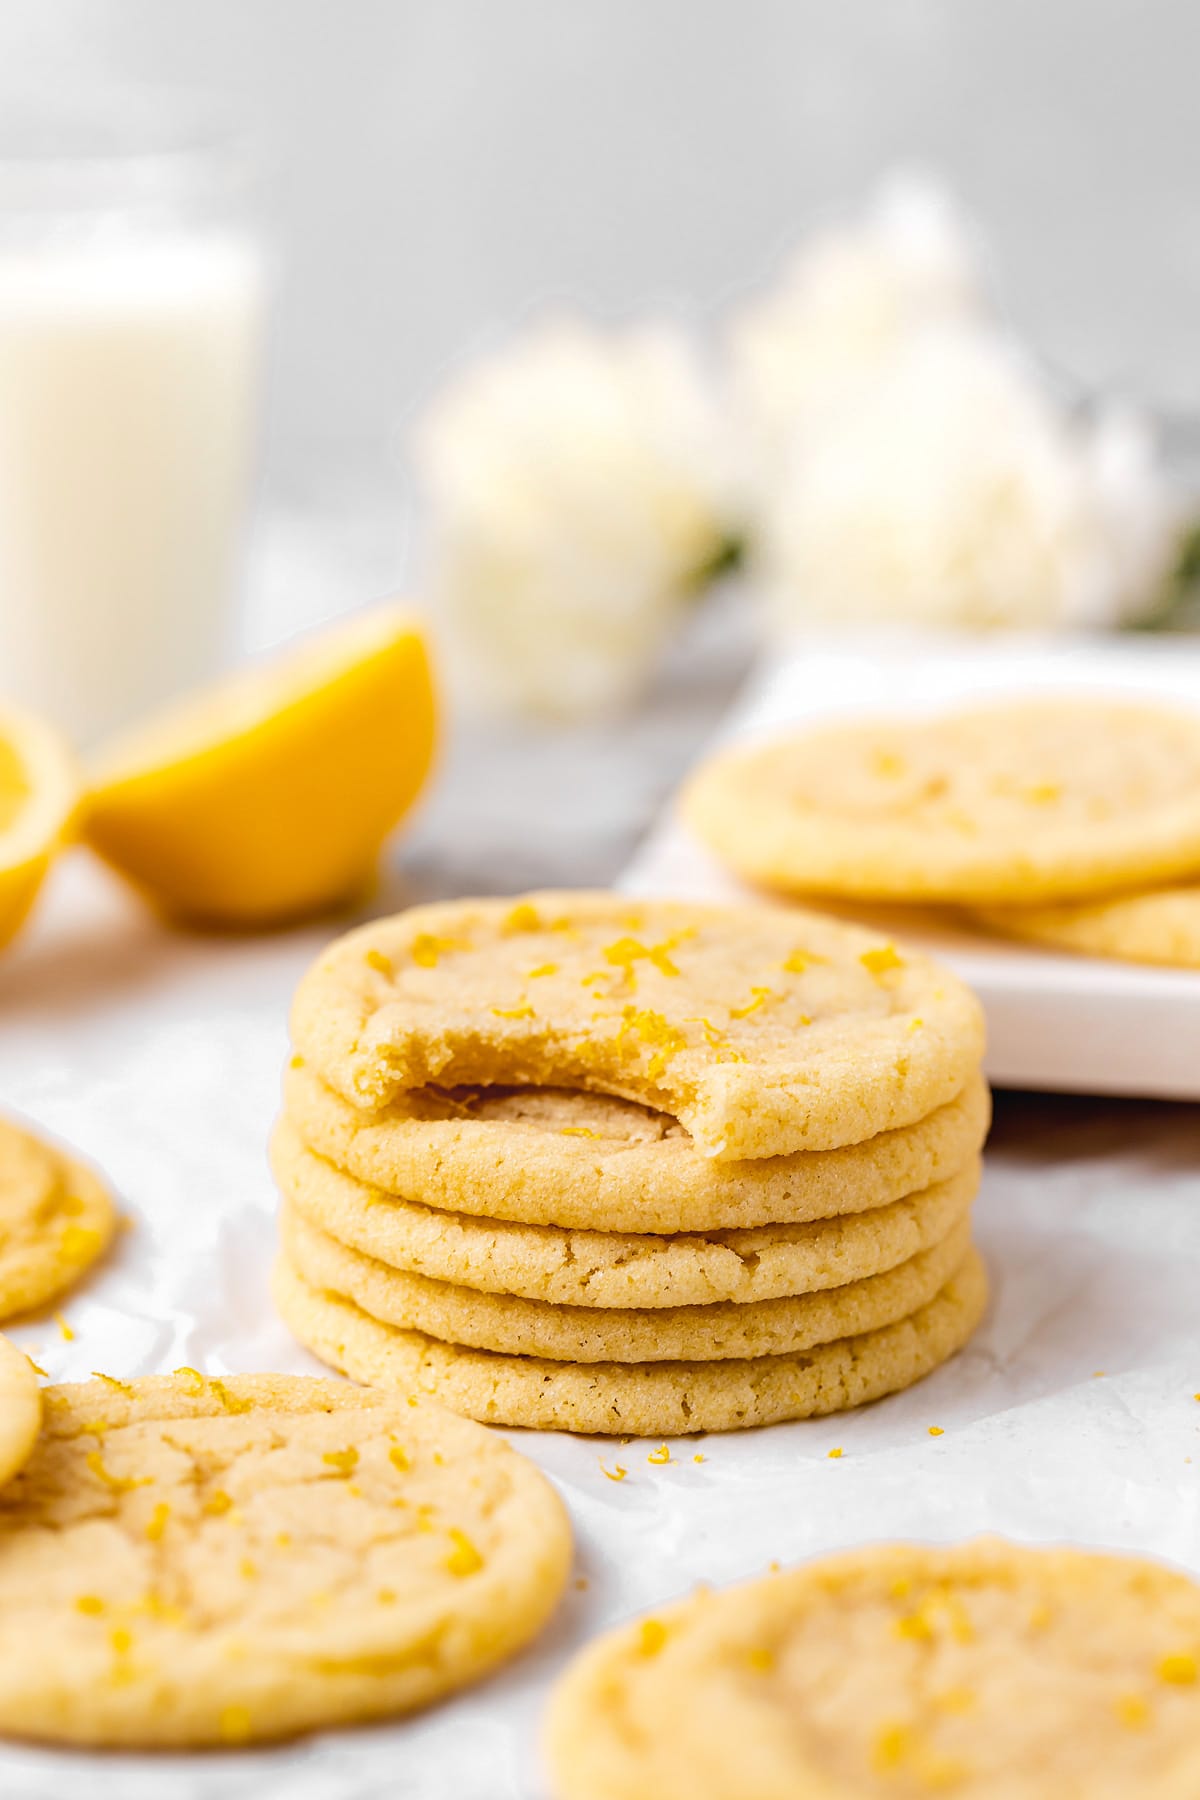 https://www.twopeasandtheirpod.com/wp-content/uploads/2011/03/Lemon-Sugar-Cookies-27.jpg